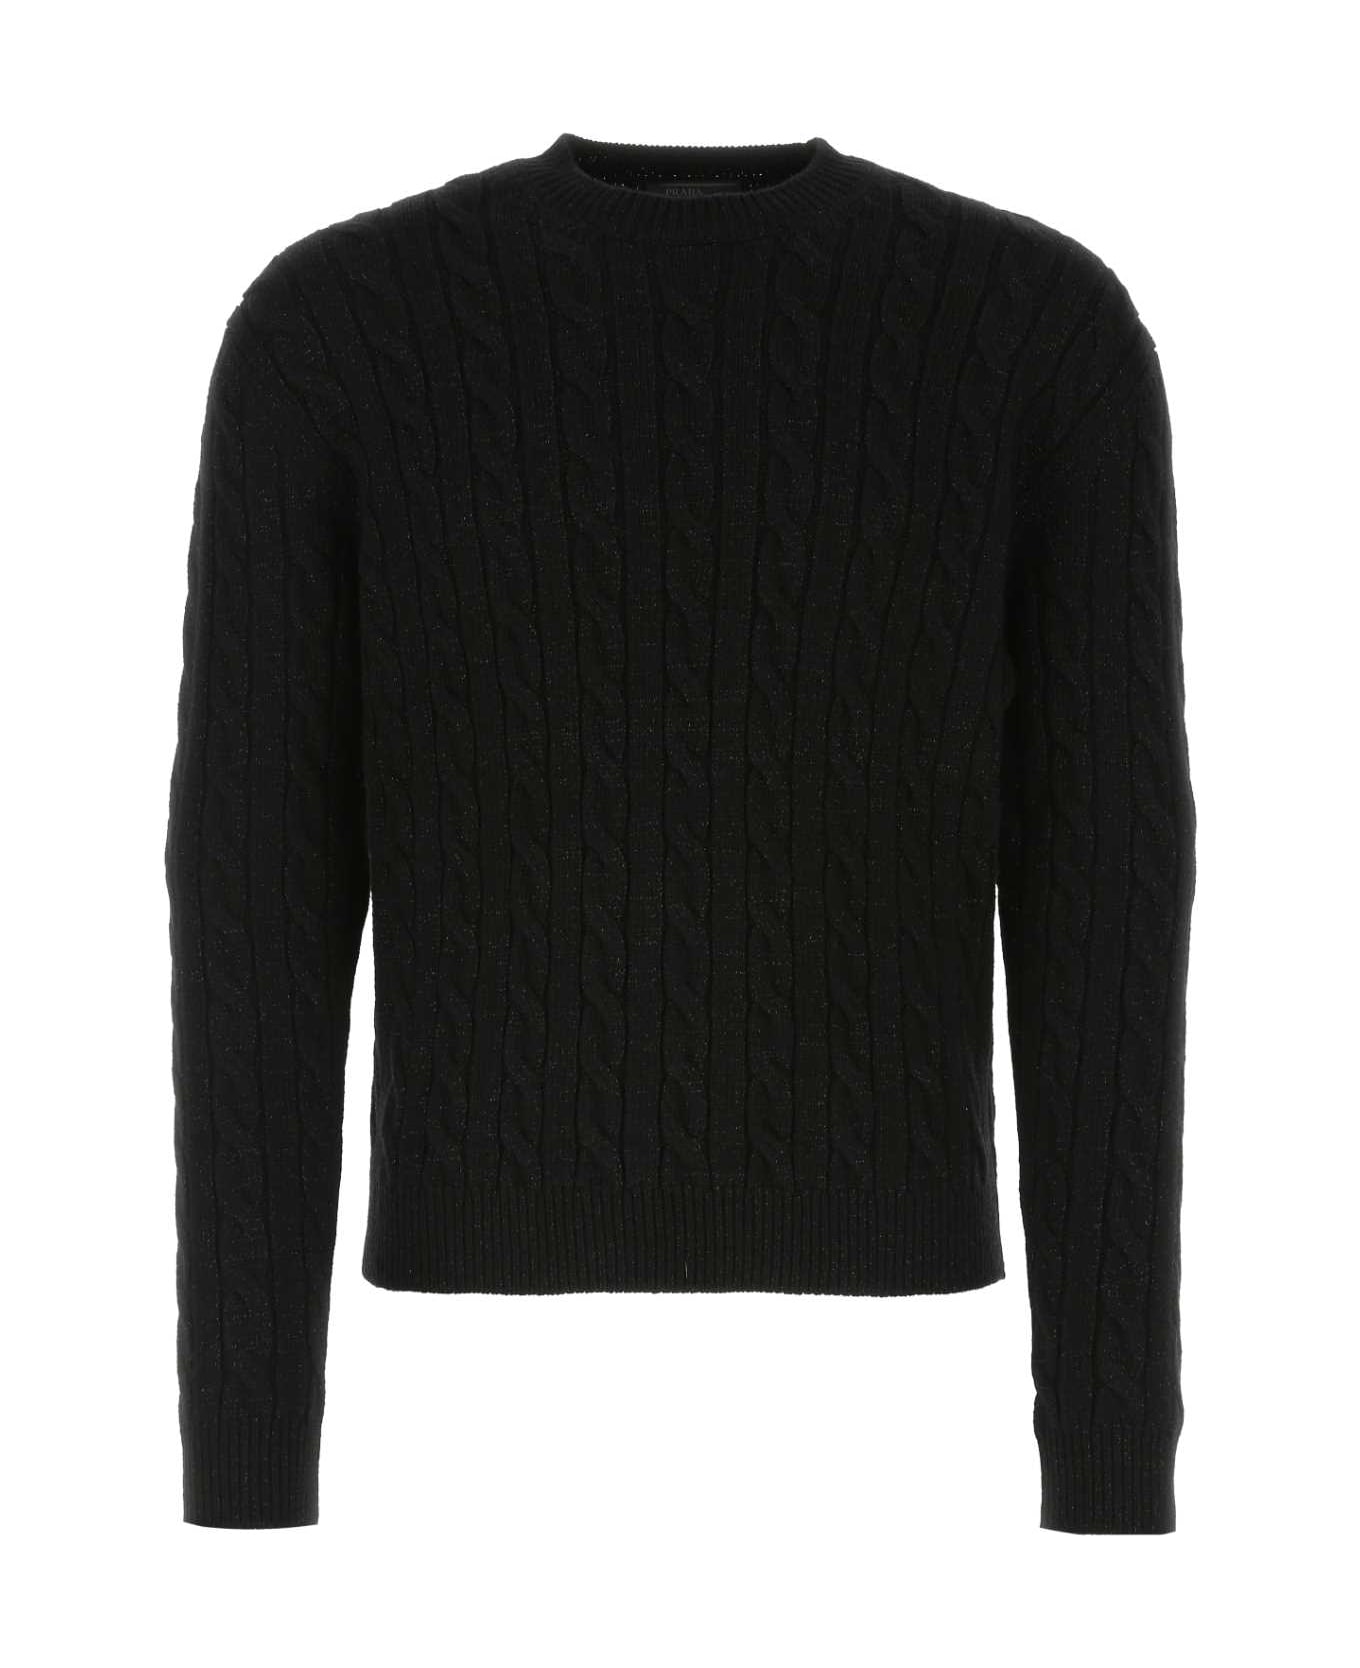 Prada Black Wool Blend Sweater - Black